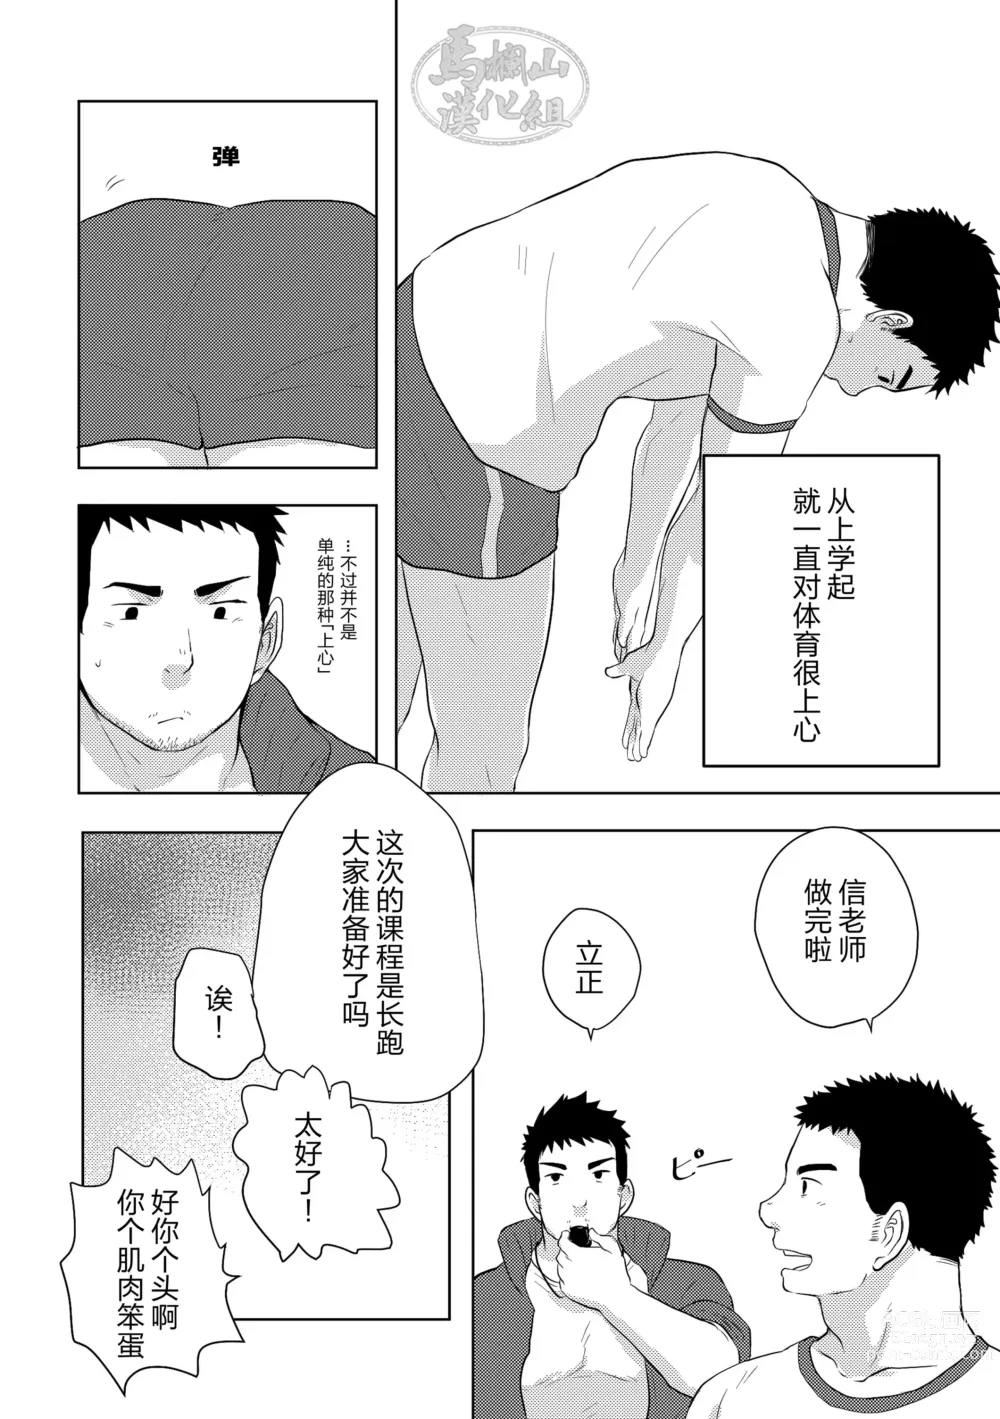 Page 7 of manga 汗だく体育